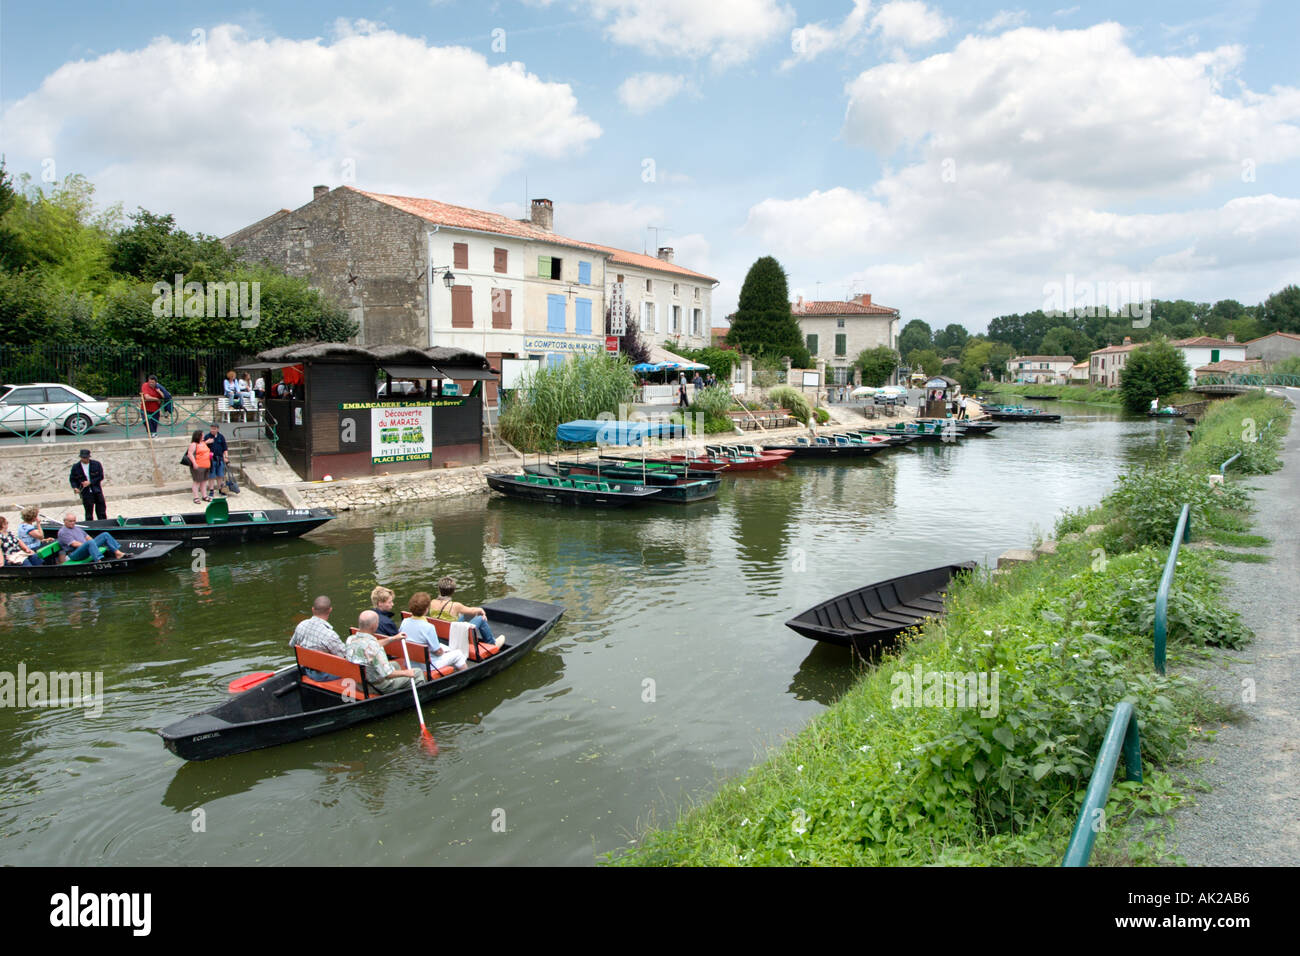 Gite in barca sul fiume Sevre, Coulon, Marais Poitevin, Poitou Charentes, Francia Foto Stock